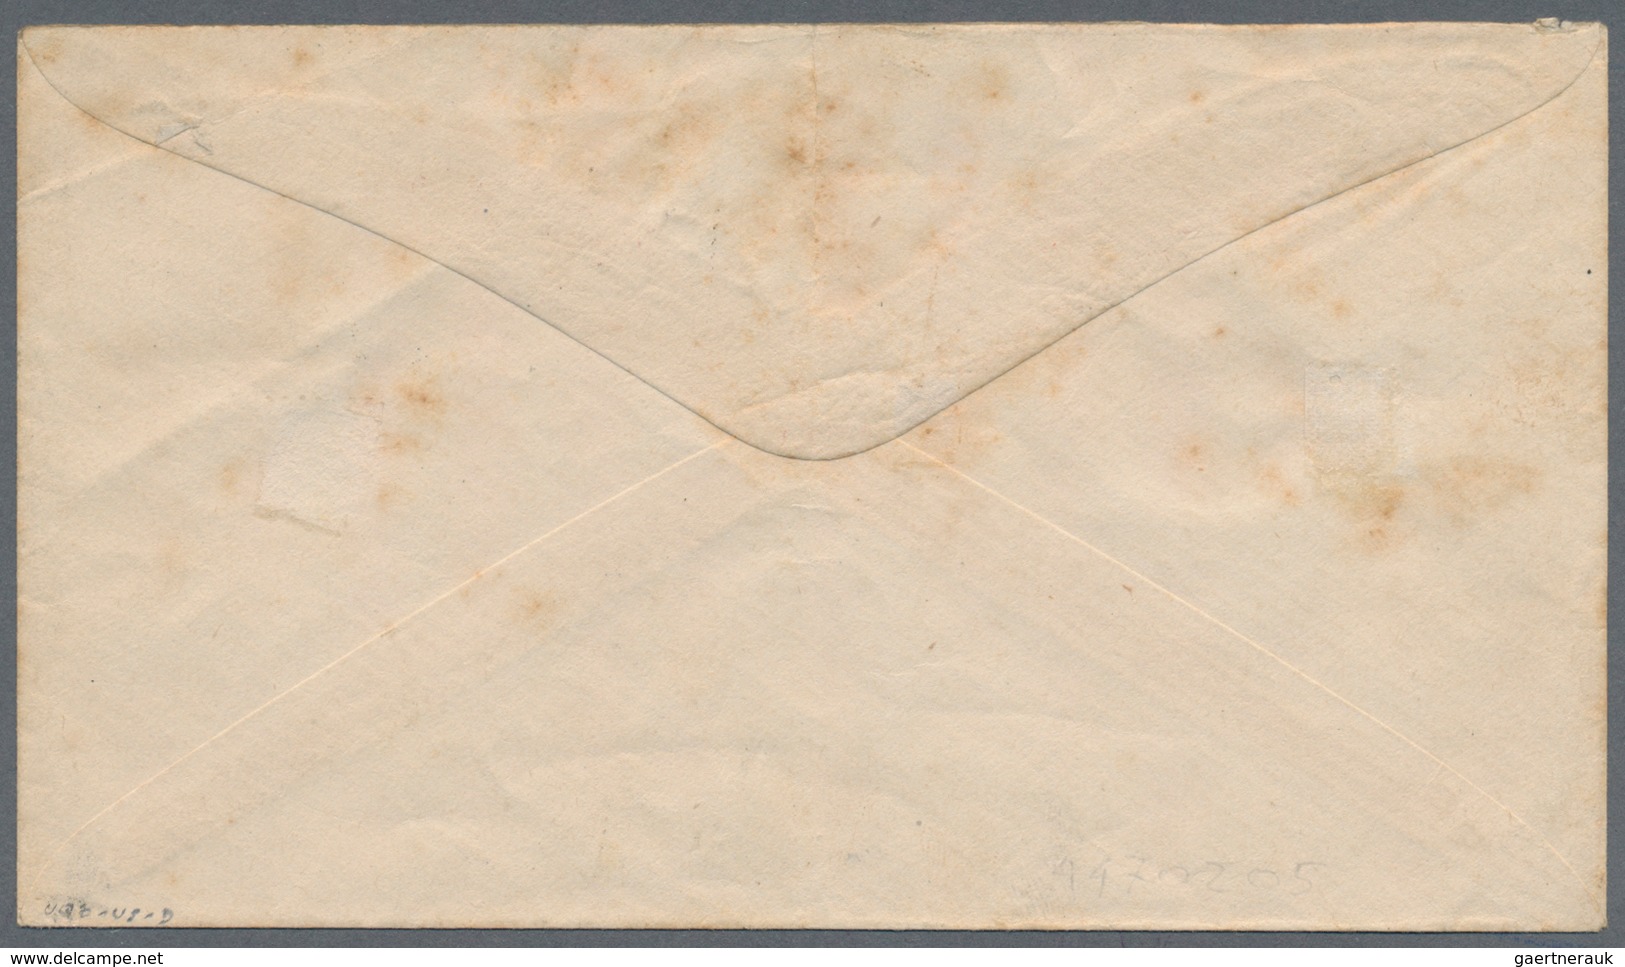 Honduras: 1890, 10 C Orange Seebeck (round Left Upper Corner, Few Stains) Tied On Illustrated Envelo - Honduras